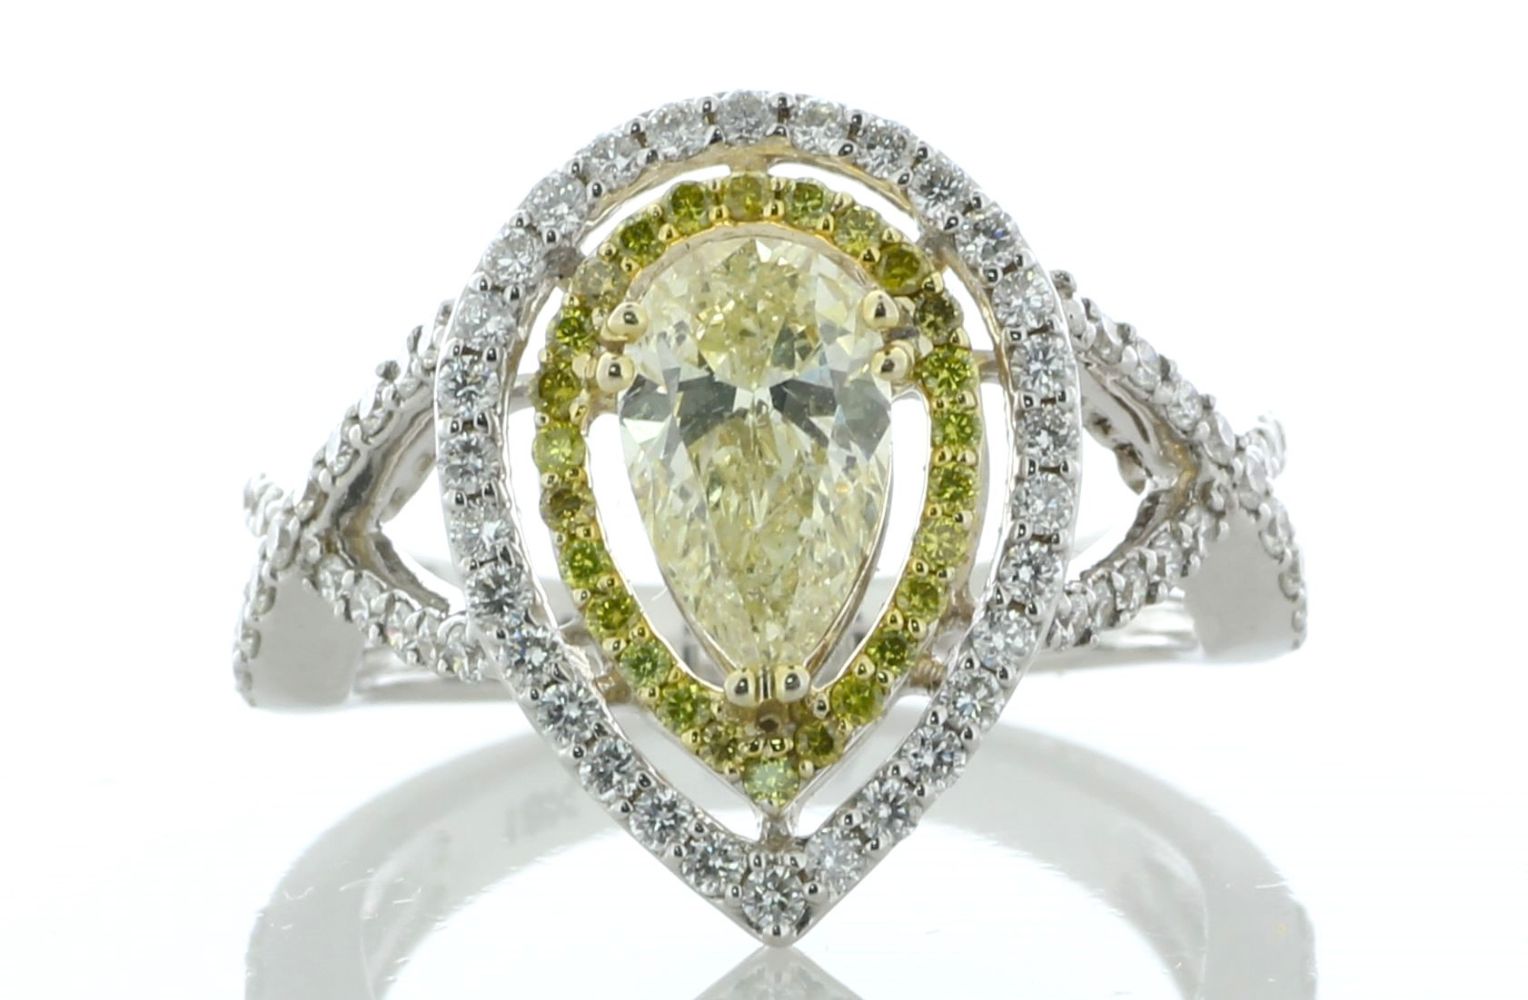 Cetrificated Fine Jewellery, Gemstones & Diamond Liquidation